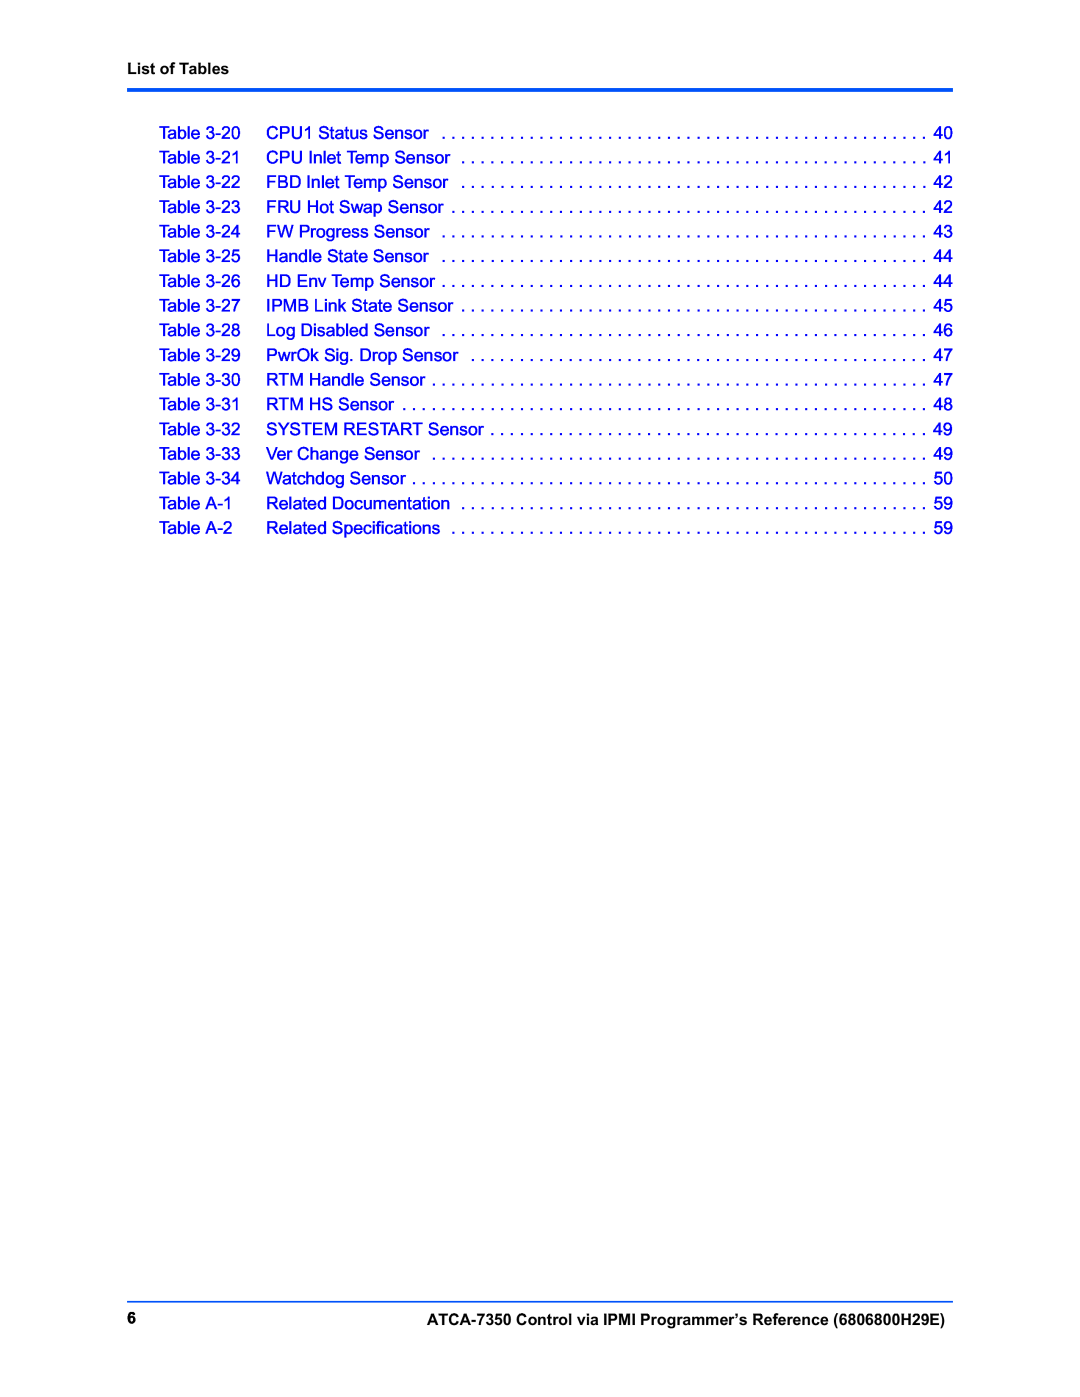 Emerson ATCA-7350 manual List of Tables 